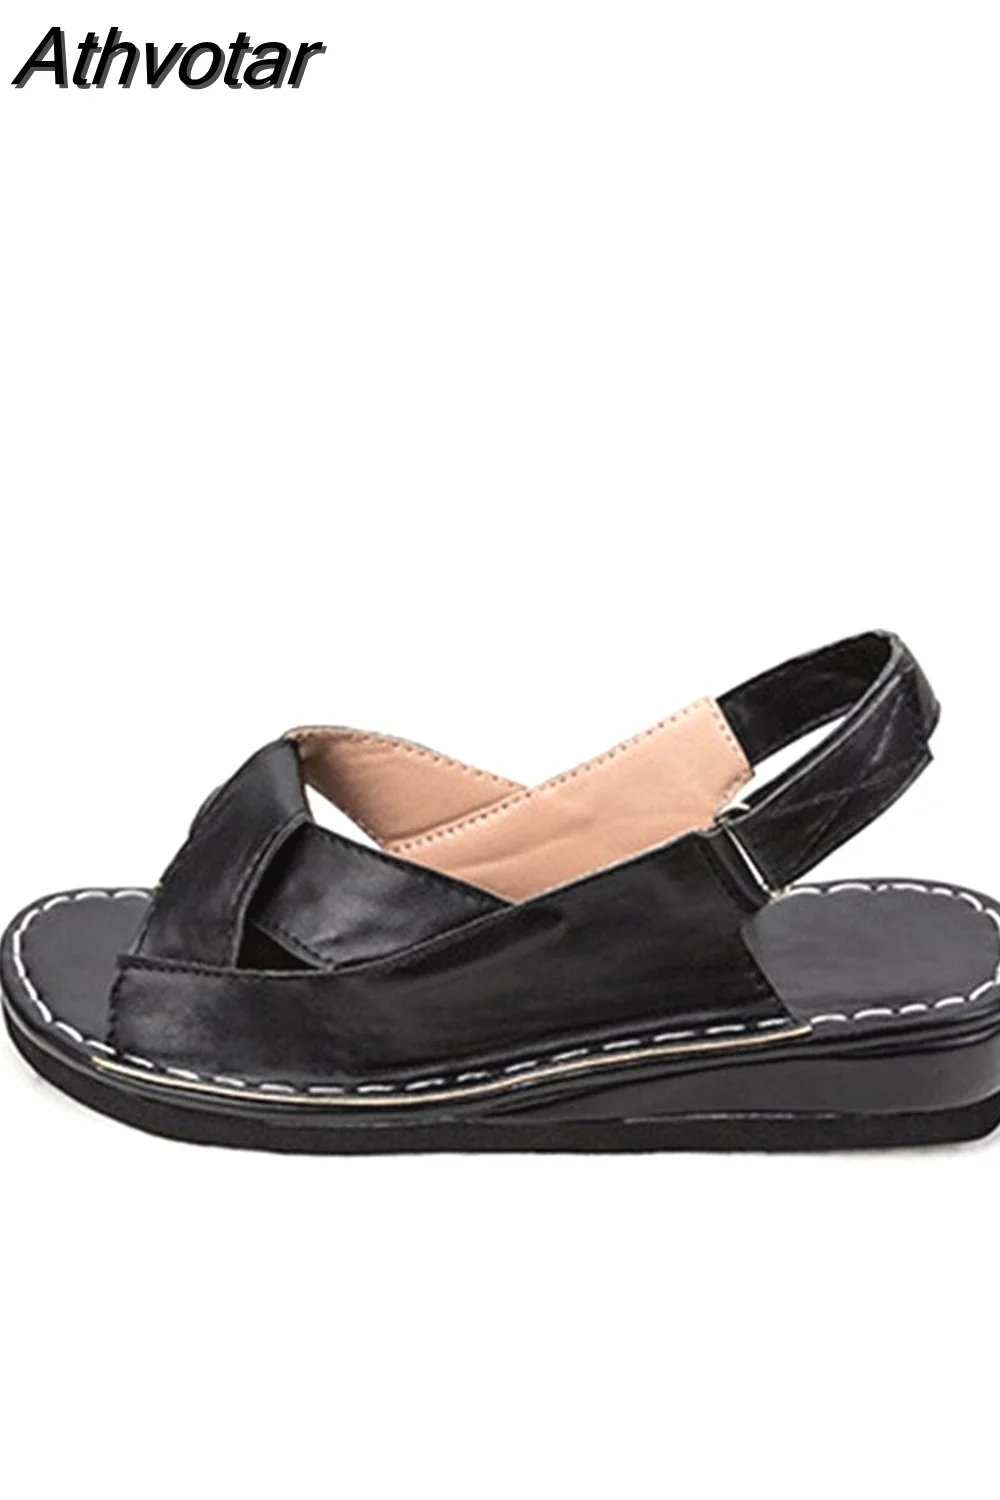 Athvotar Sandals Summer Female Shoes Women's Peep Toe Wedge Woman Comfortable Plus Size Female Platform Ladies New 2023 430-0